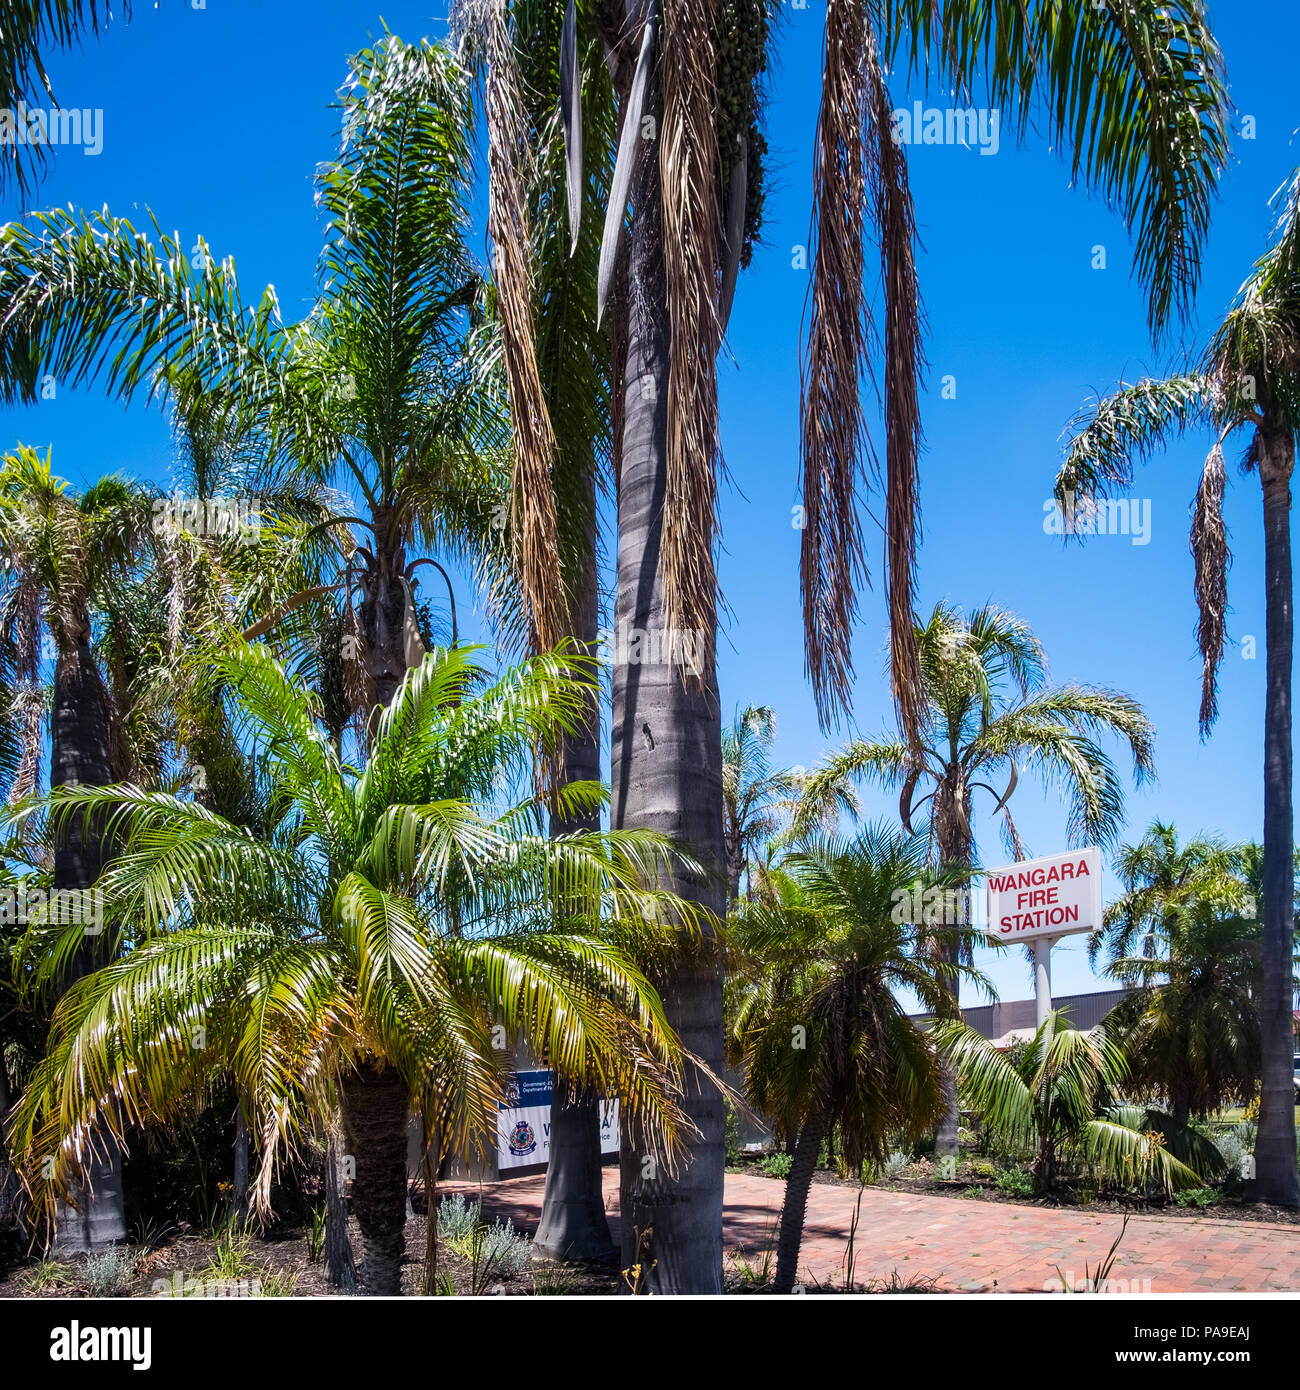 Palm trees at Wangara Fire Station, wanneroo, perth, west australia christmas 2017 Stock Photo